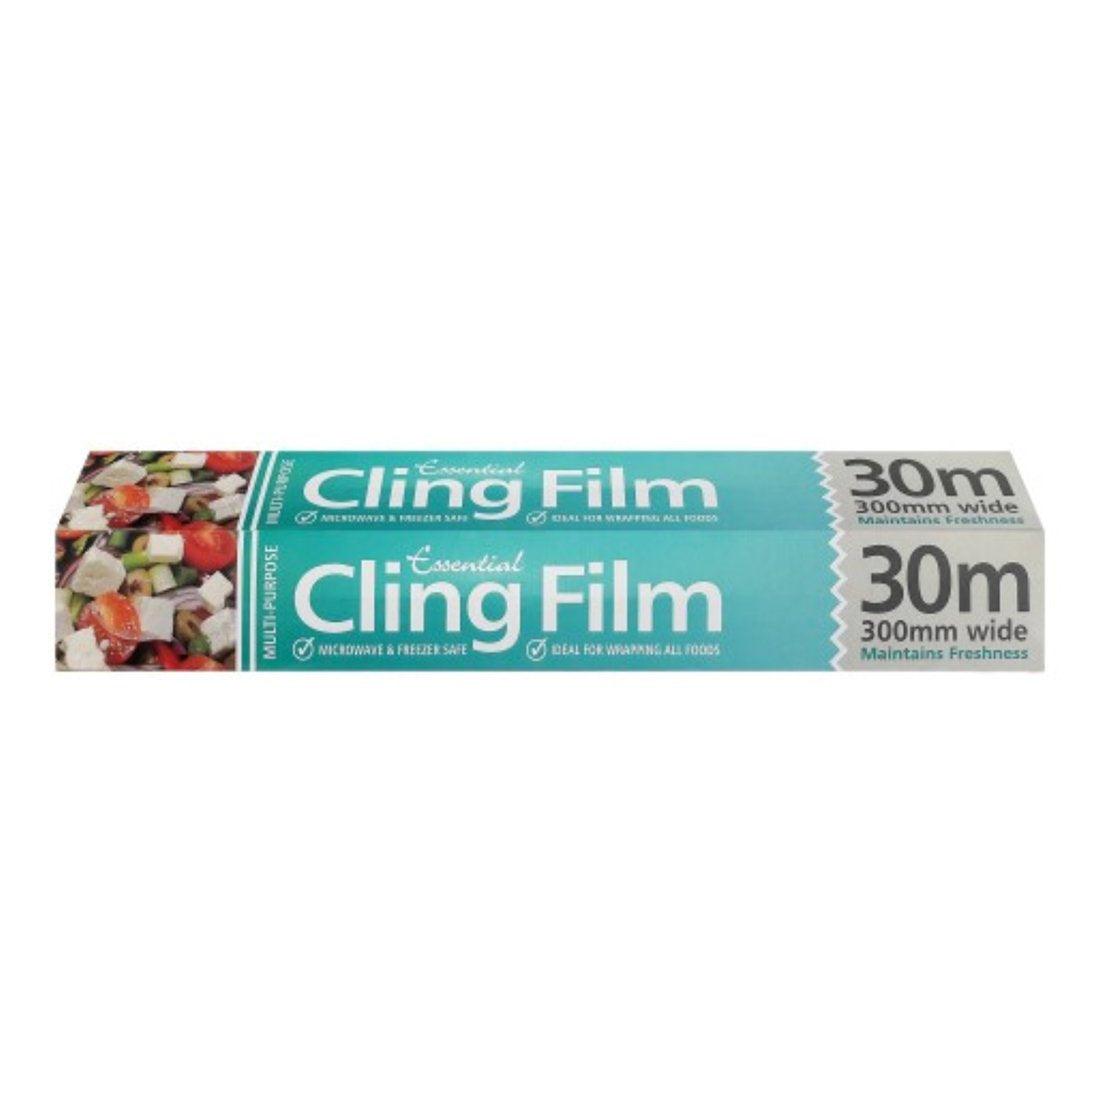 Essential Cling Film 30mtr X 300mm - Vending Superstore